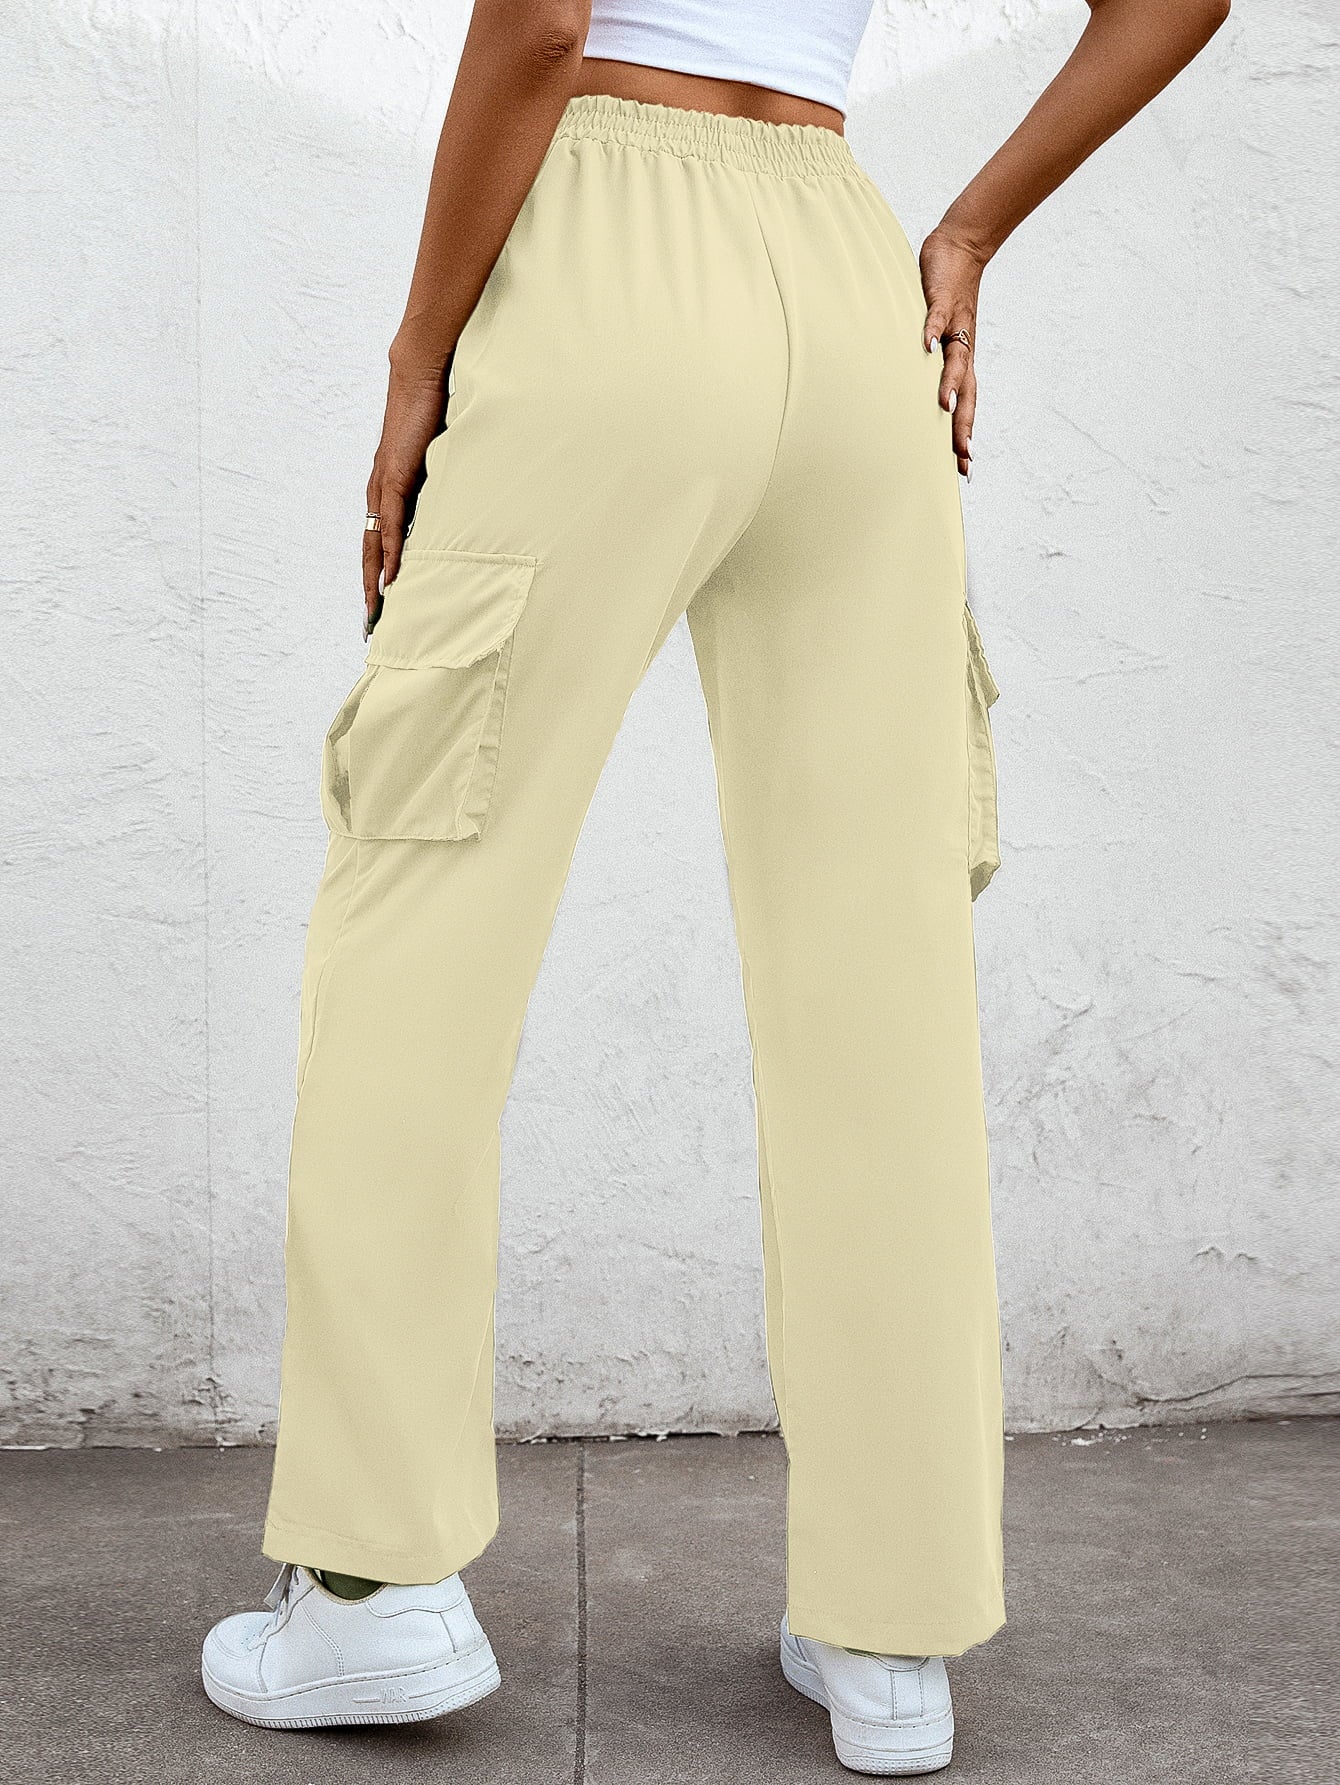 Trendsi Elastic Waist Cargo Pants Charcoal / XL